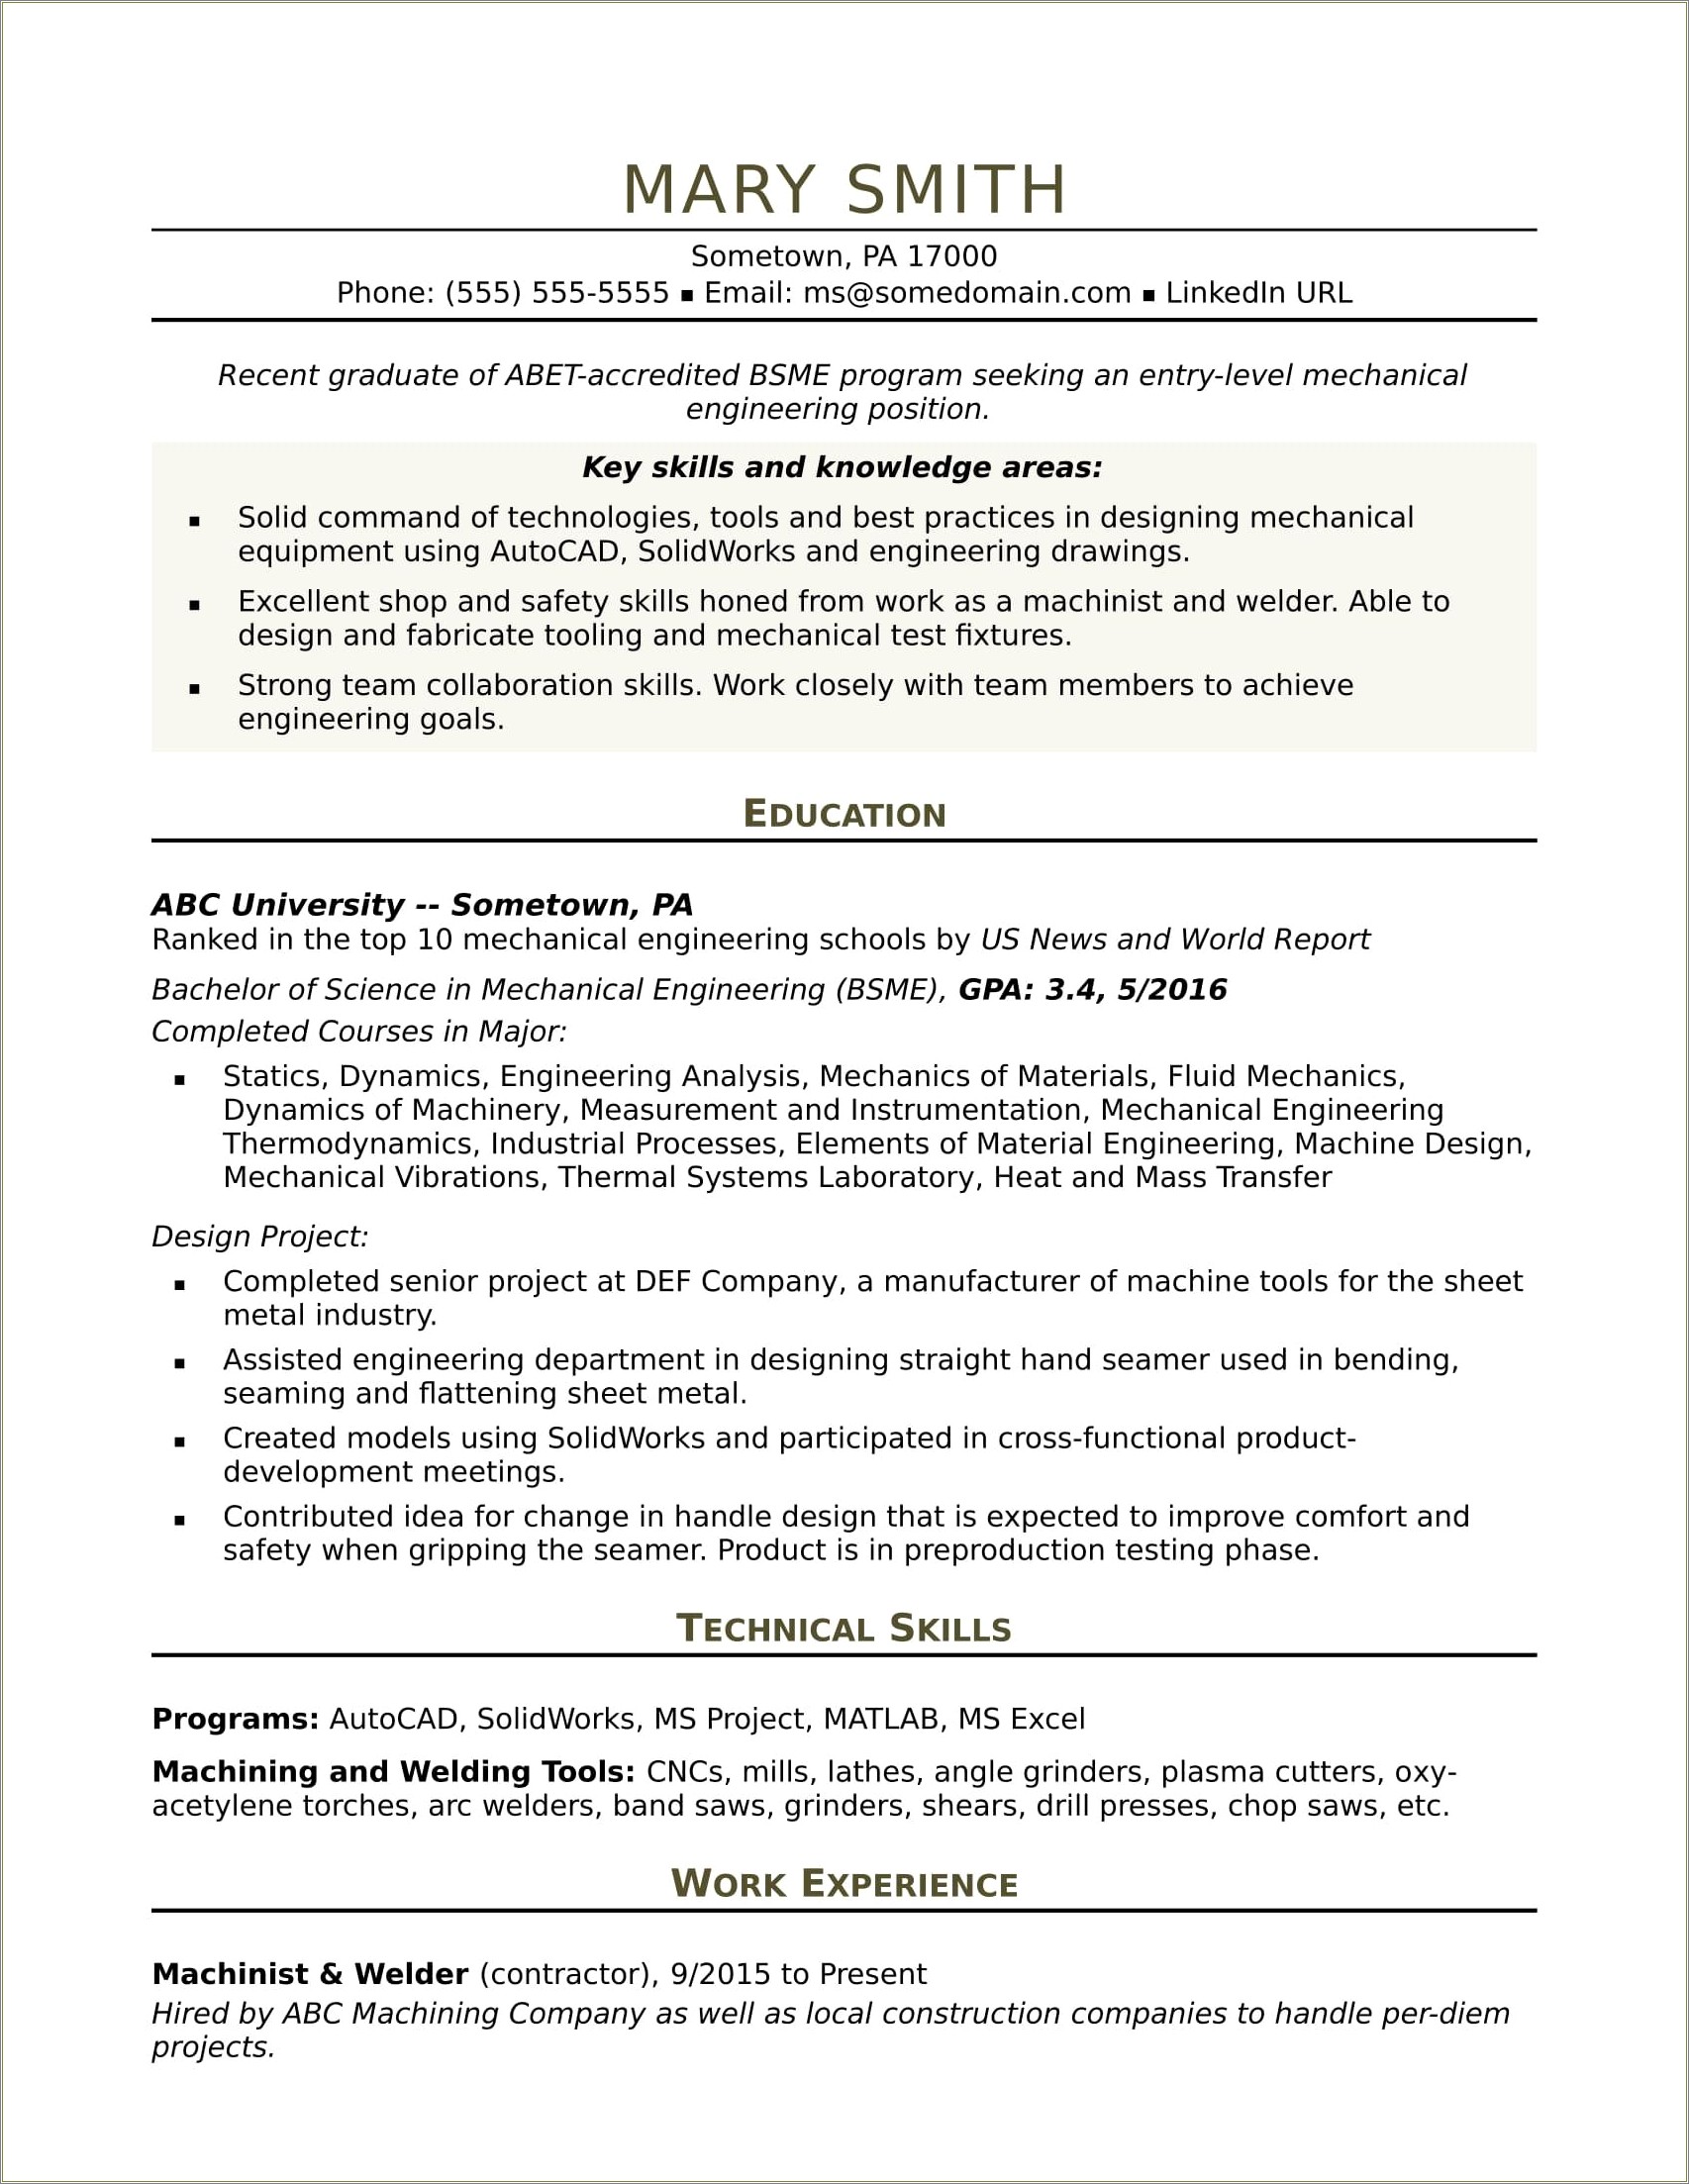 Generic Resume Objective Engineer Entry Level